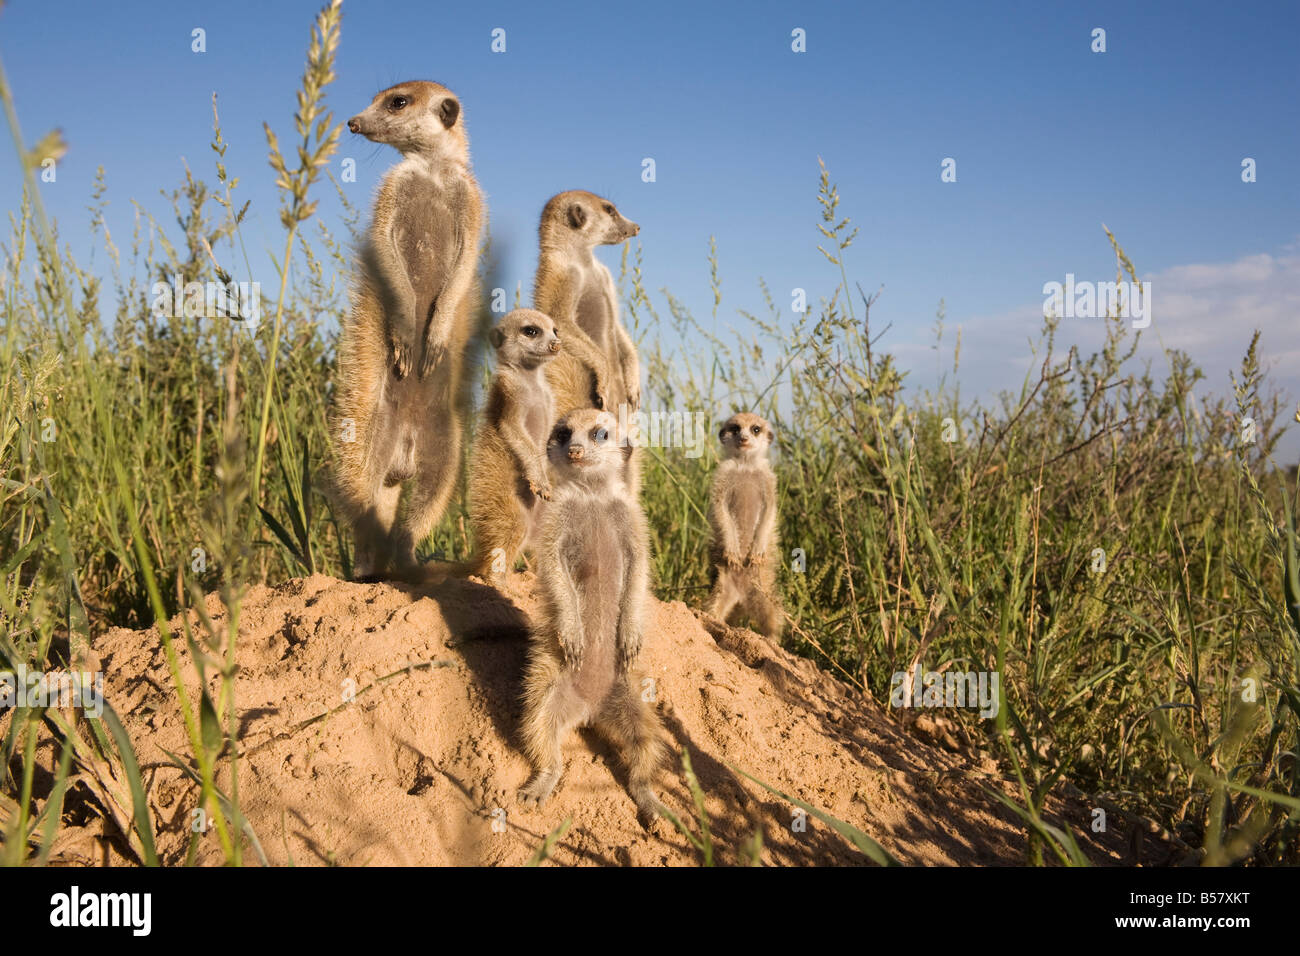 Group of meerkats (Suricata suricatta), Kalahari Meerkat Project, Van Zylsrus, Northern Cape, South Africa, Africa Stock Photo